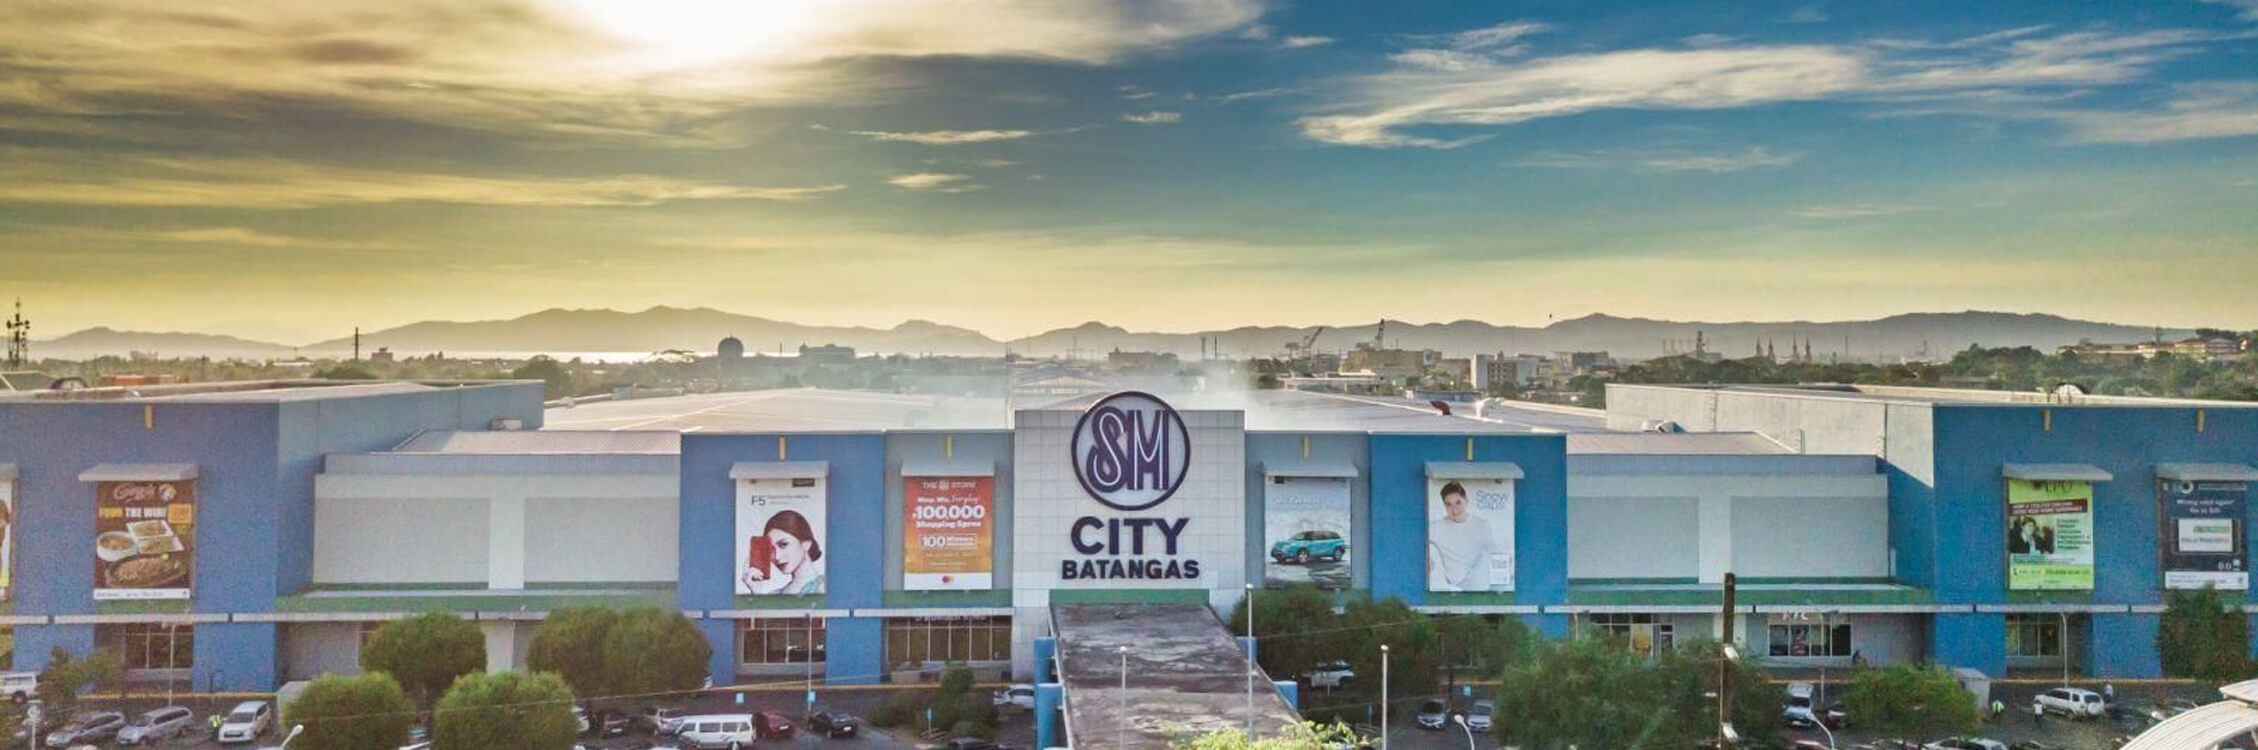 SM City Batangas